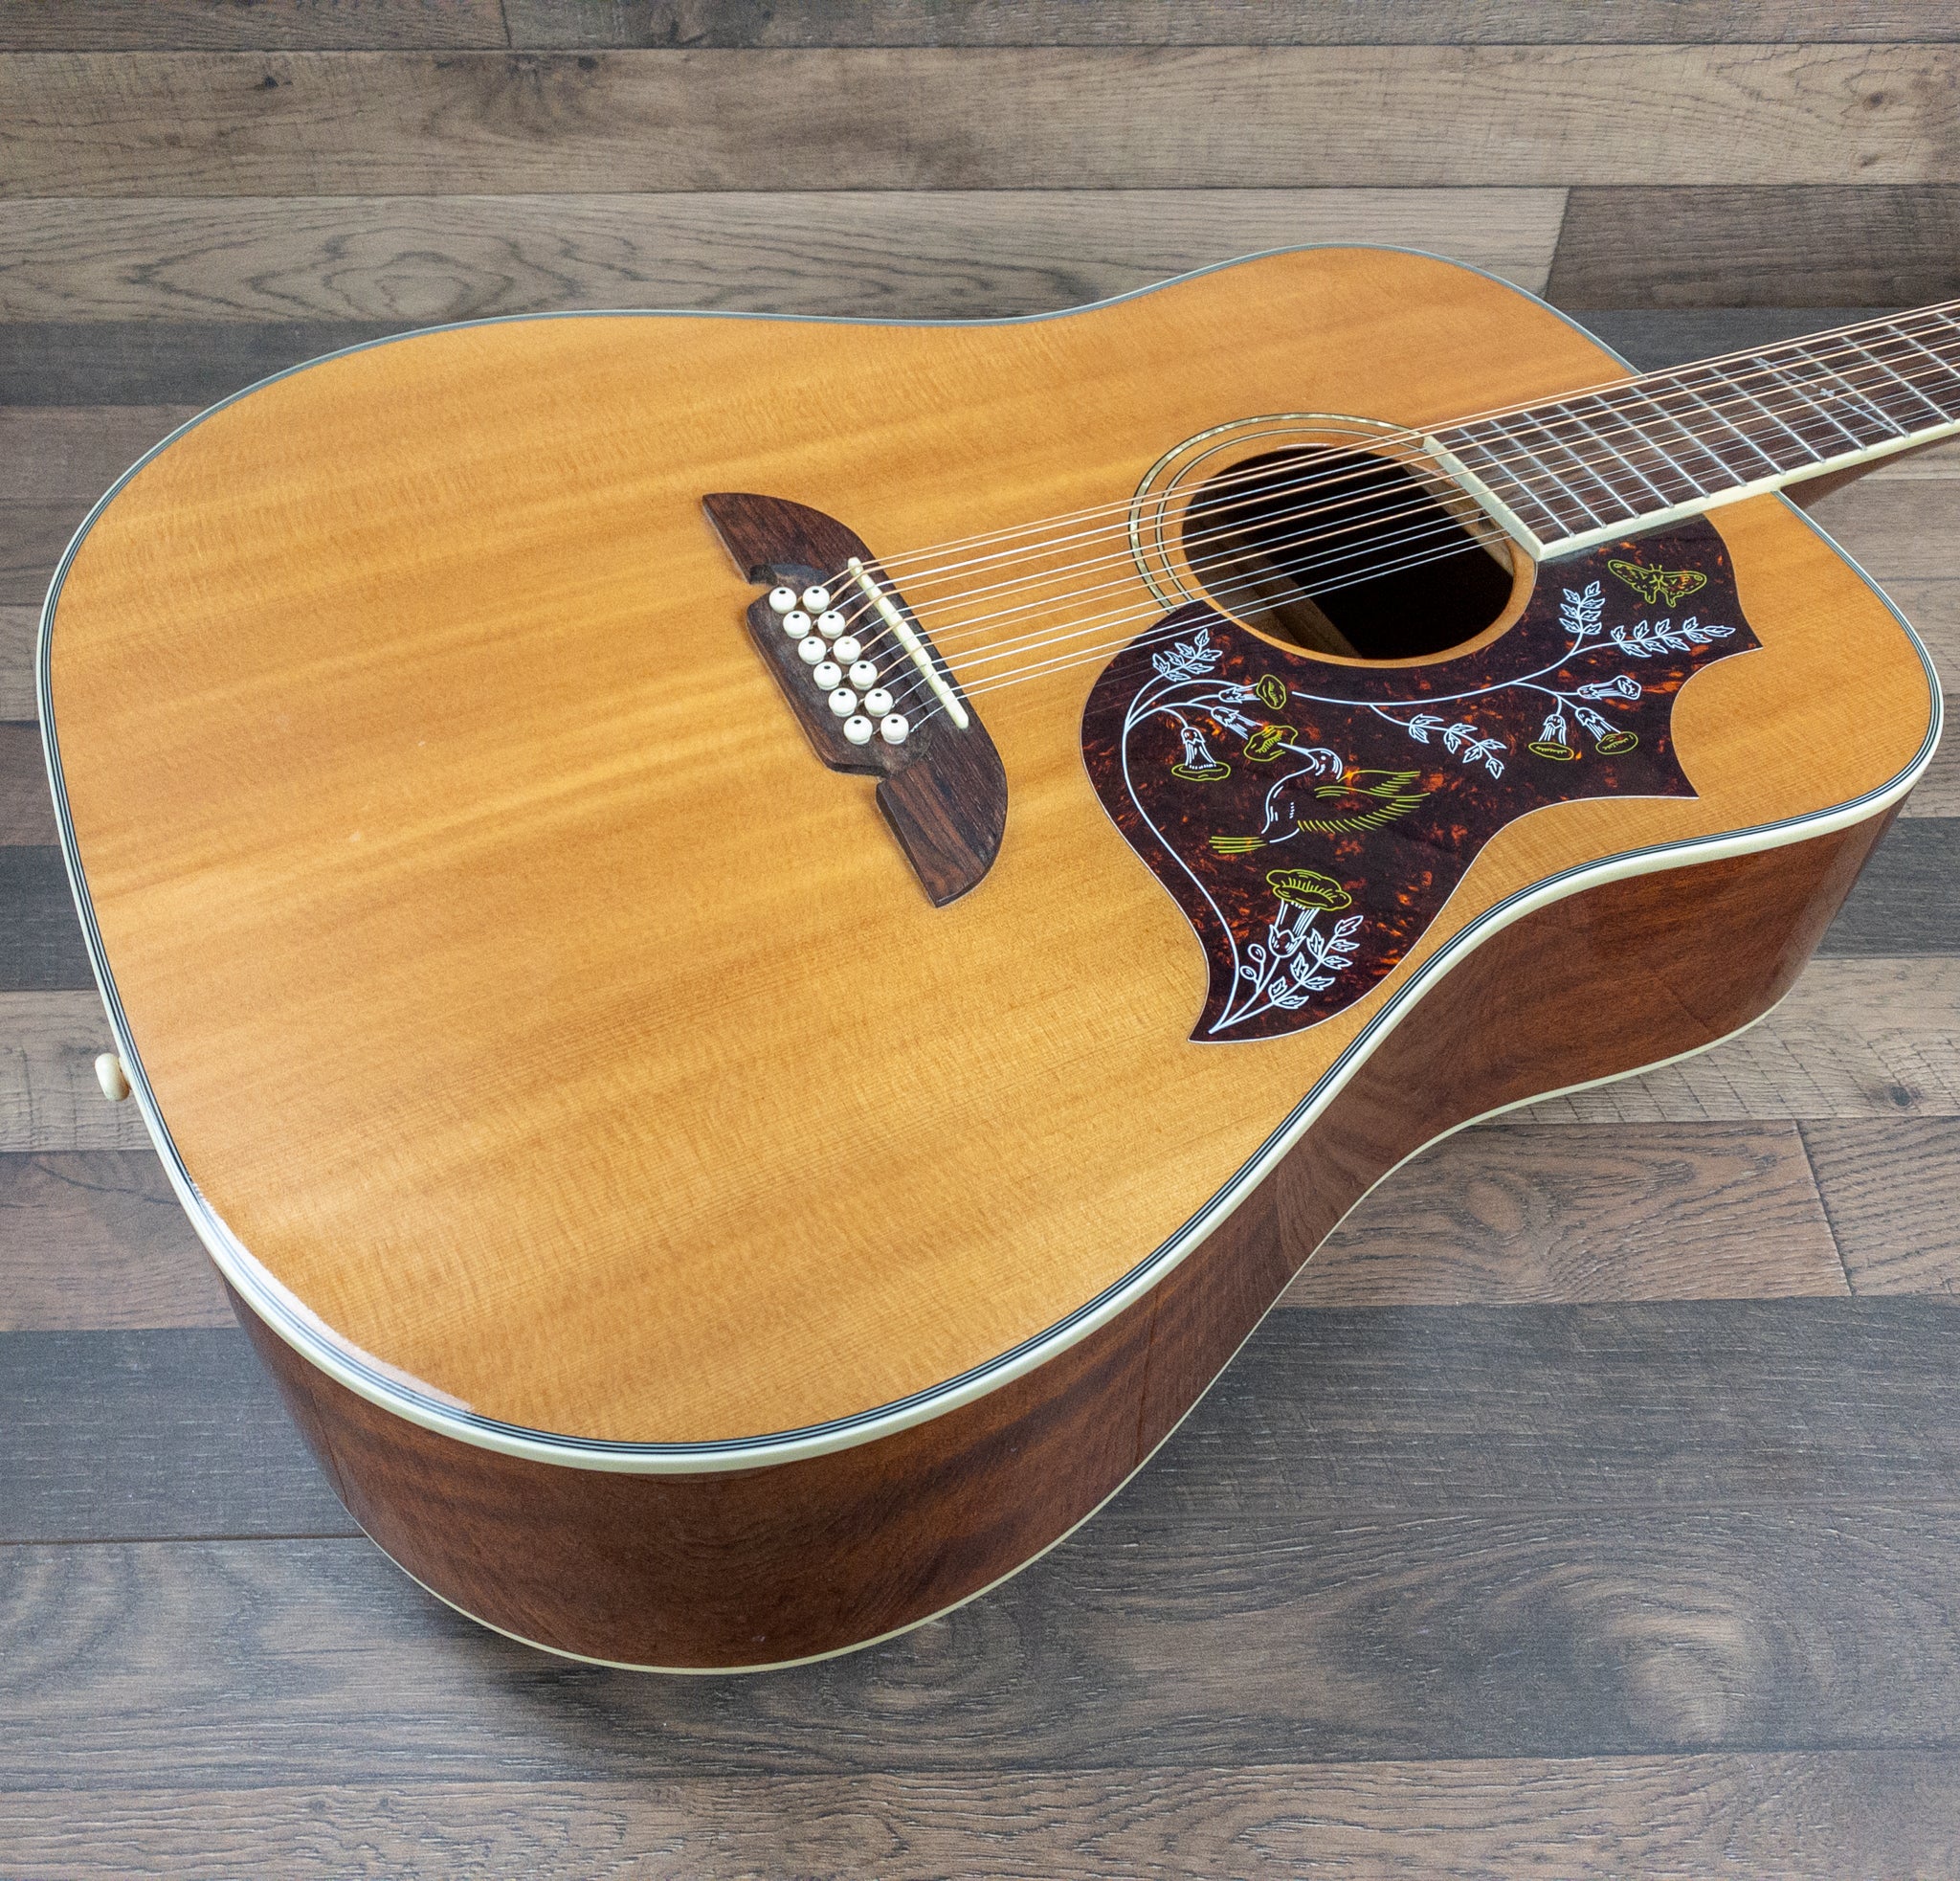 Used Alvarez AD60S12 12 String Acoustic Guitar w/Barcode Tag & Original Warranty Card